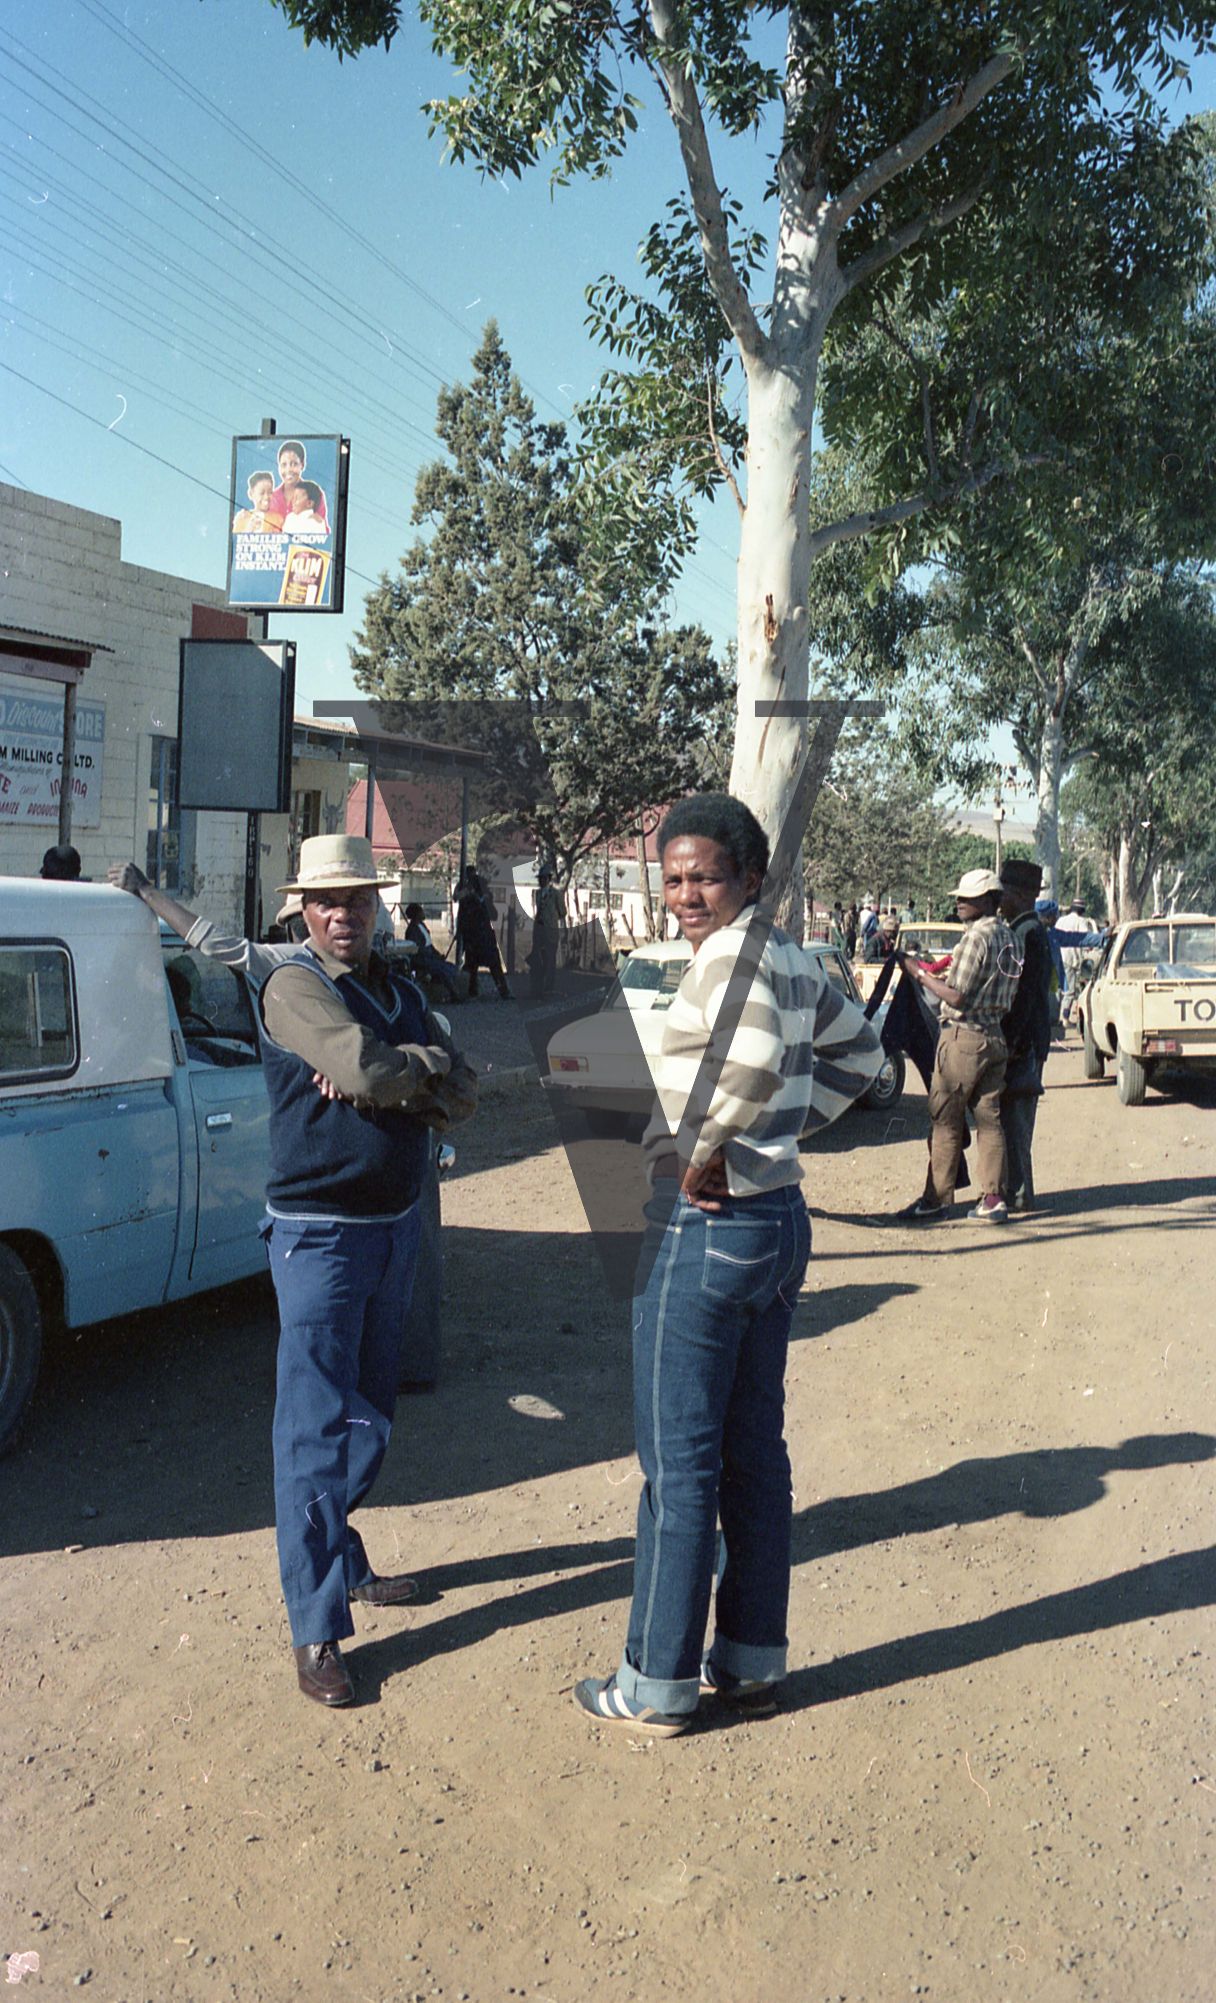 South Africa, Transkei, street scene, two men, vehicles.